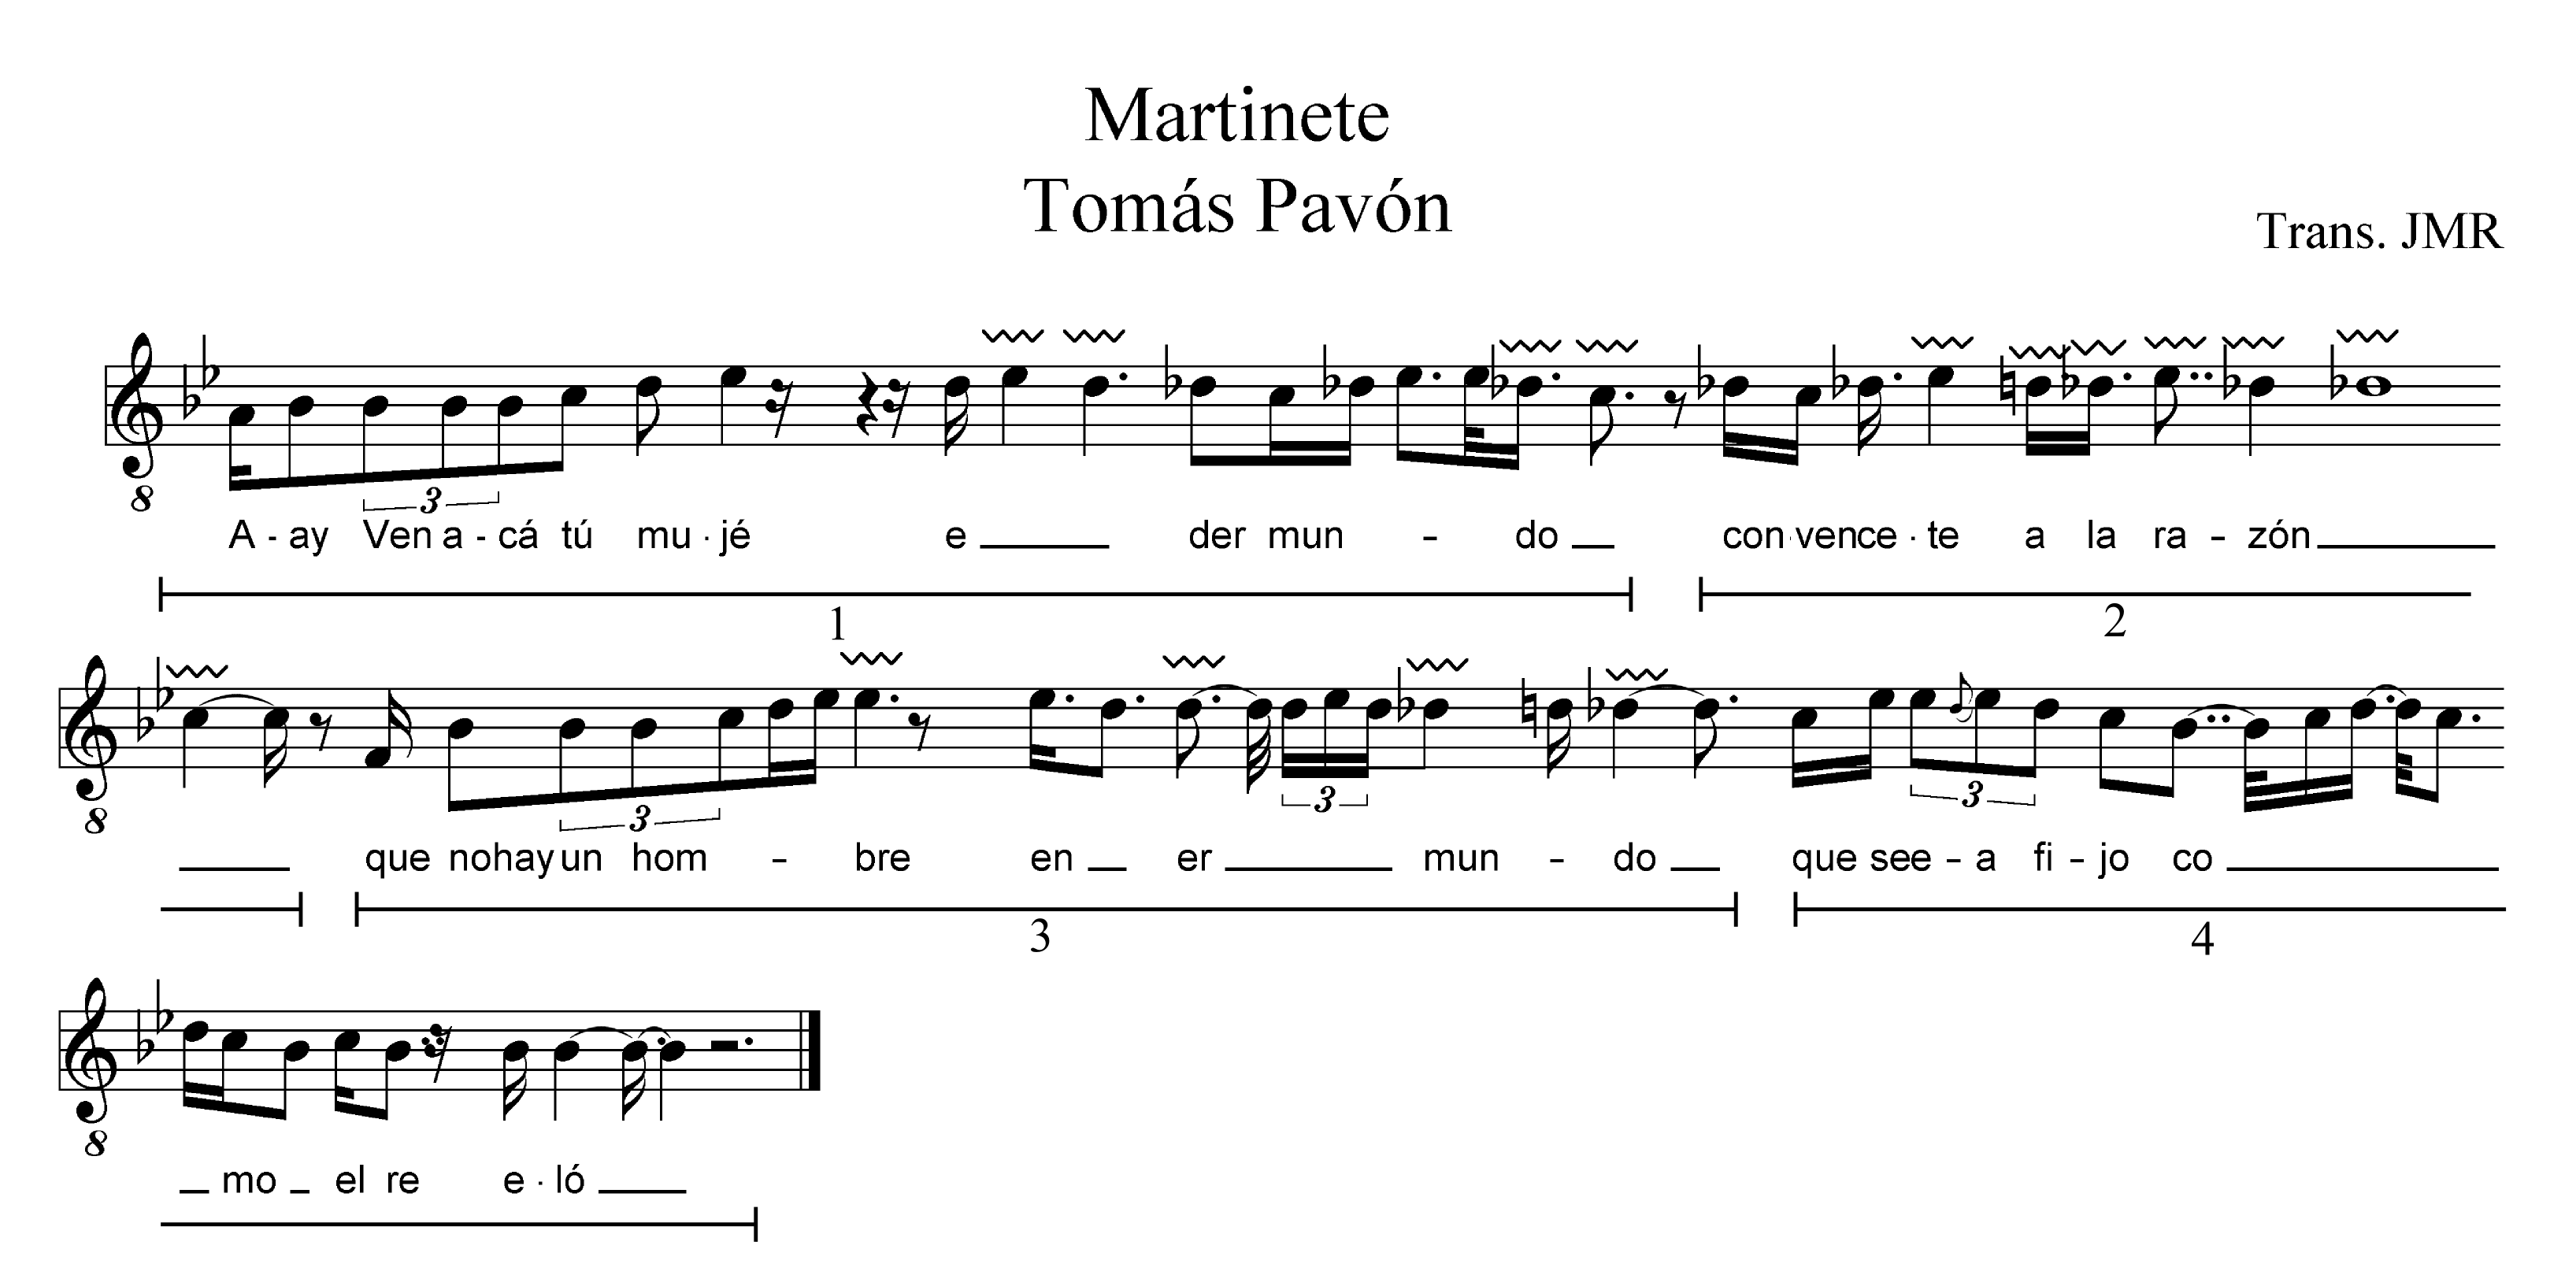 Martinete transcription into Western music notation